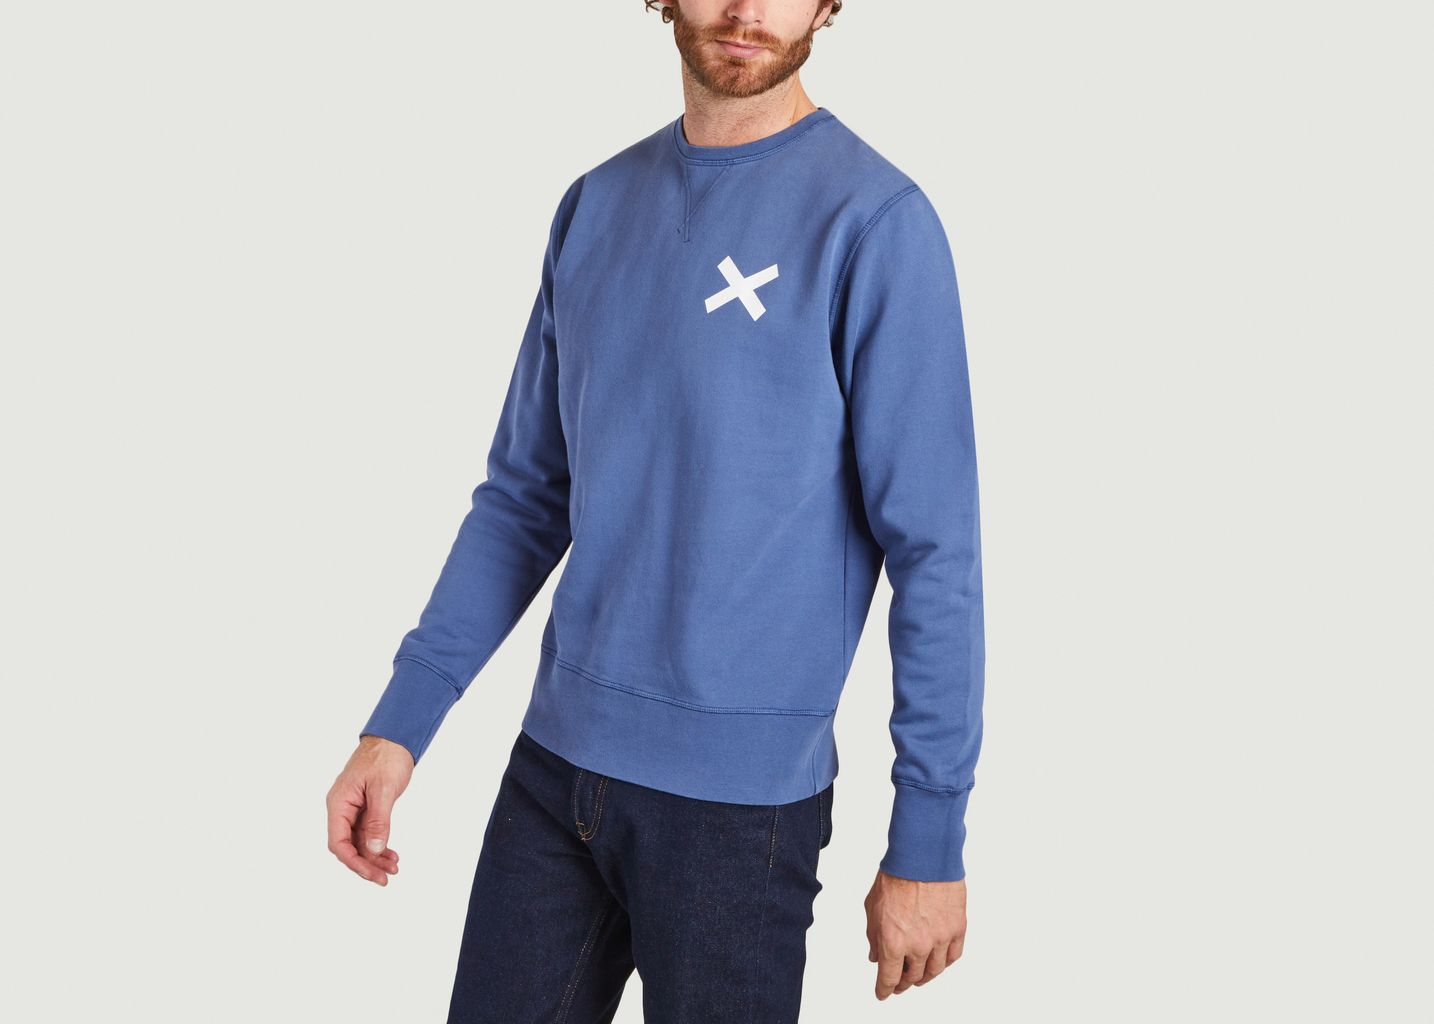 Sweatshirt en coton bio avec imprimé croix - Edmmond Studios